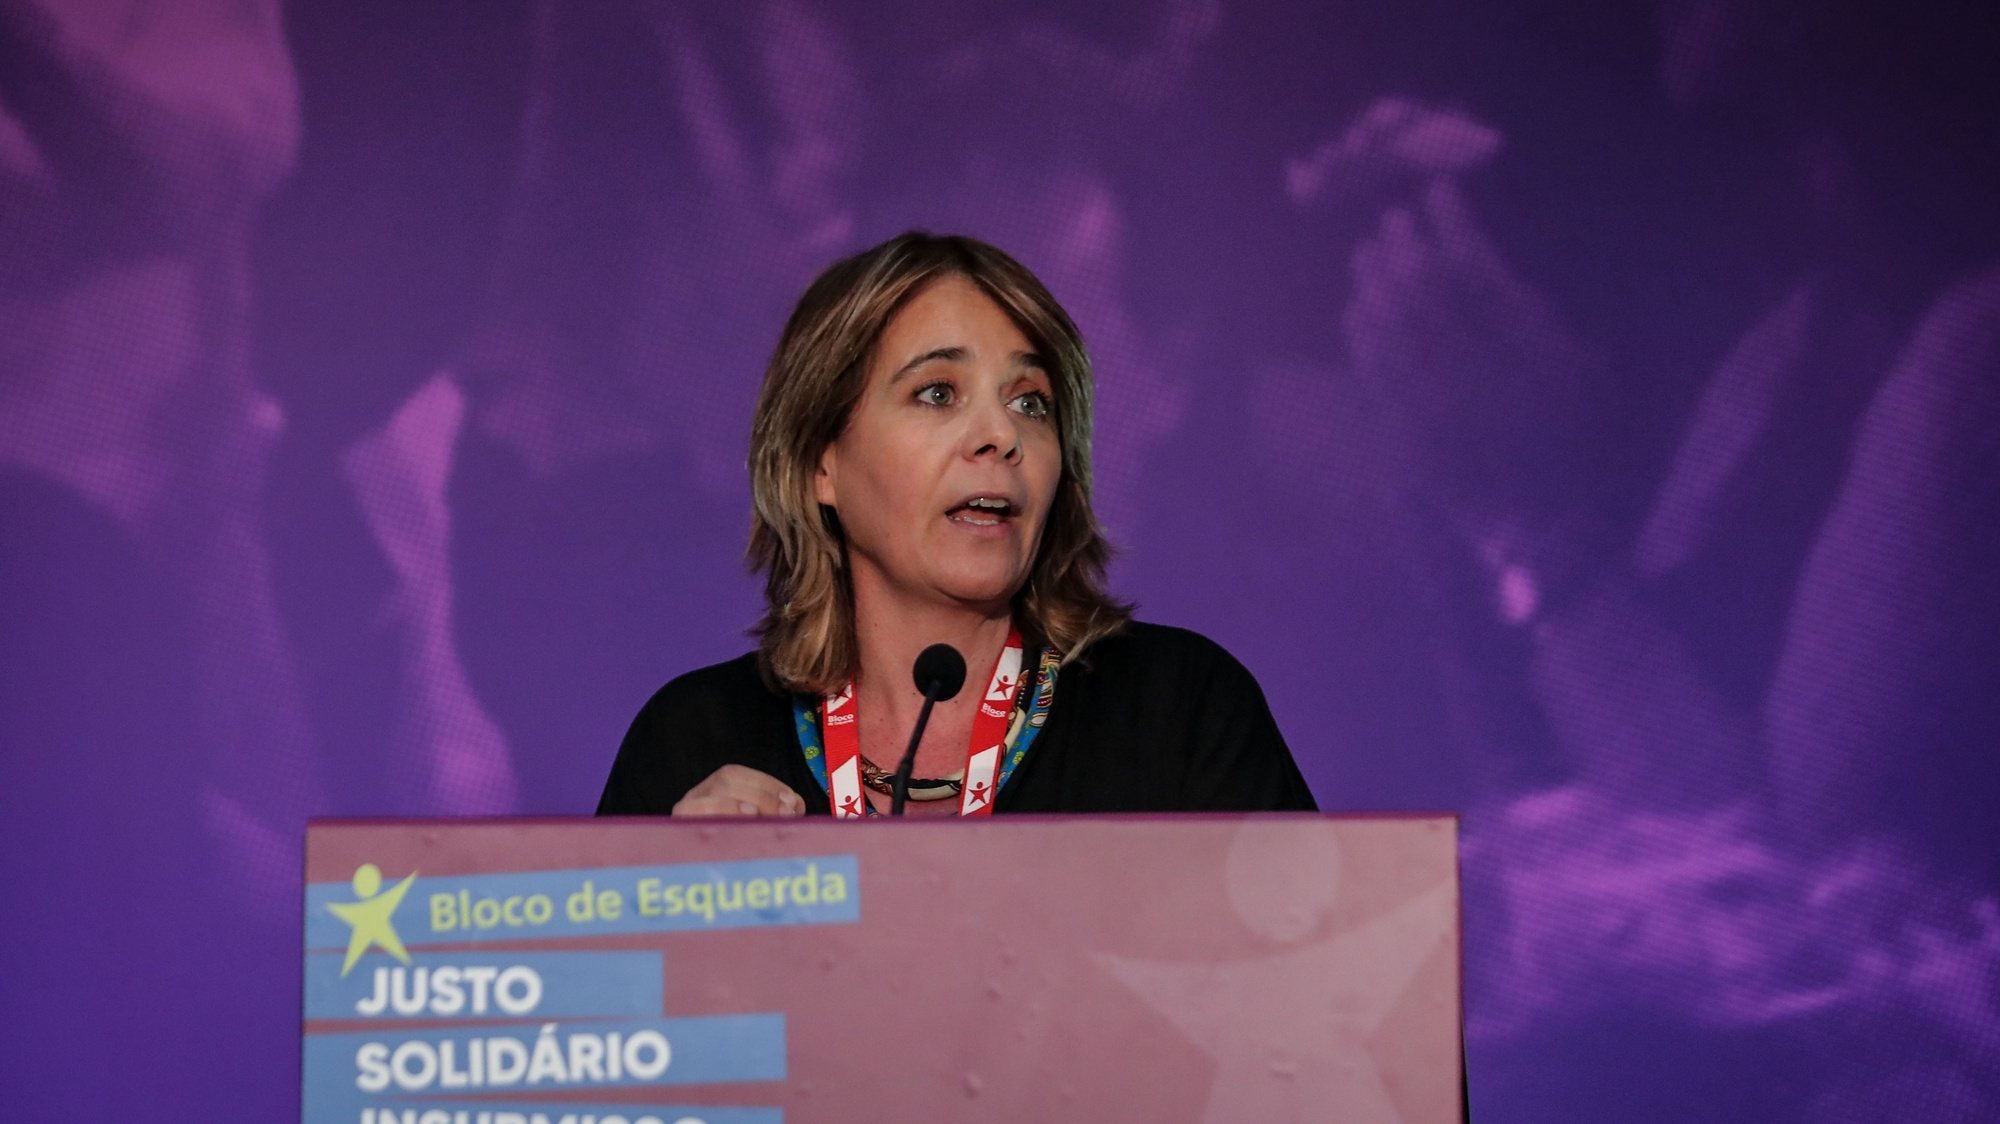 A coordenadora do Bloco de Esquerda (BE), Catarina Martins, discursa durante a Conferência Nacional realizada para discutir o rumo estratégico do partido, Lisboa, 30 de abril de 2022.  ANTÓNIO COTRIM/LUSA